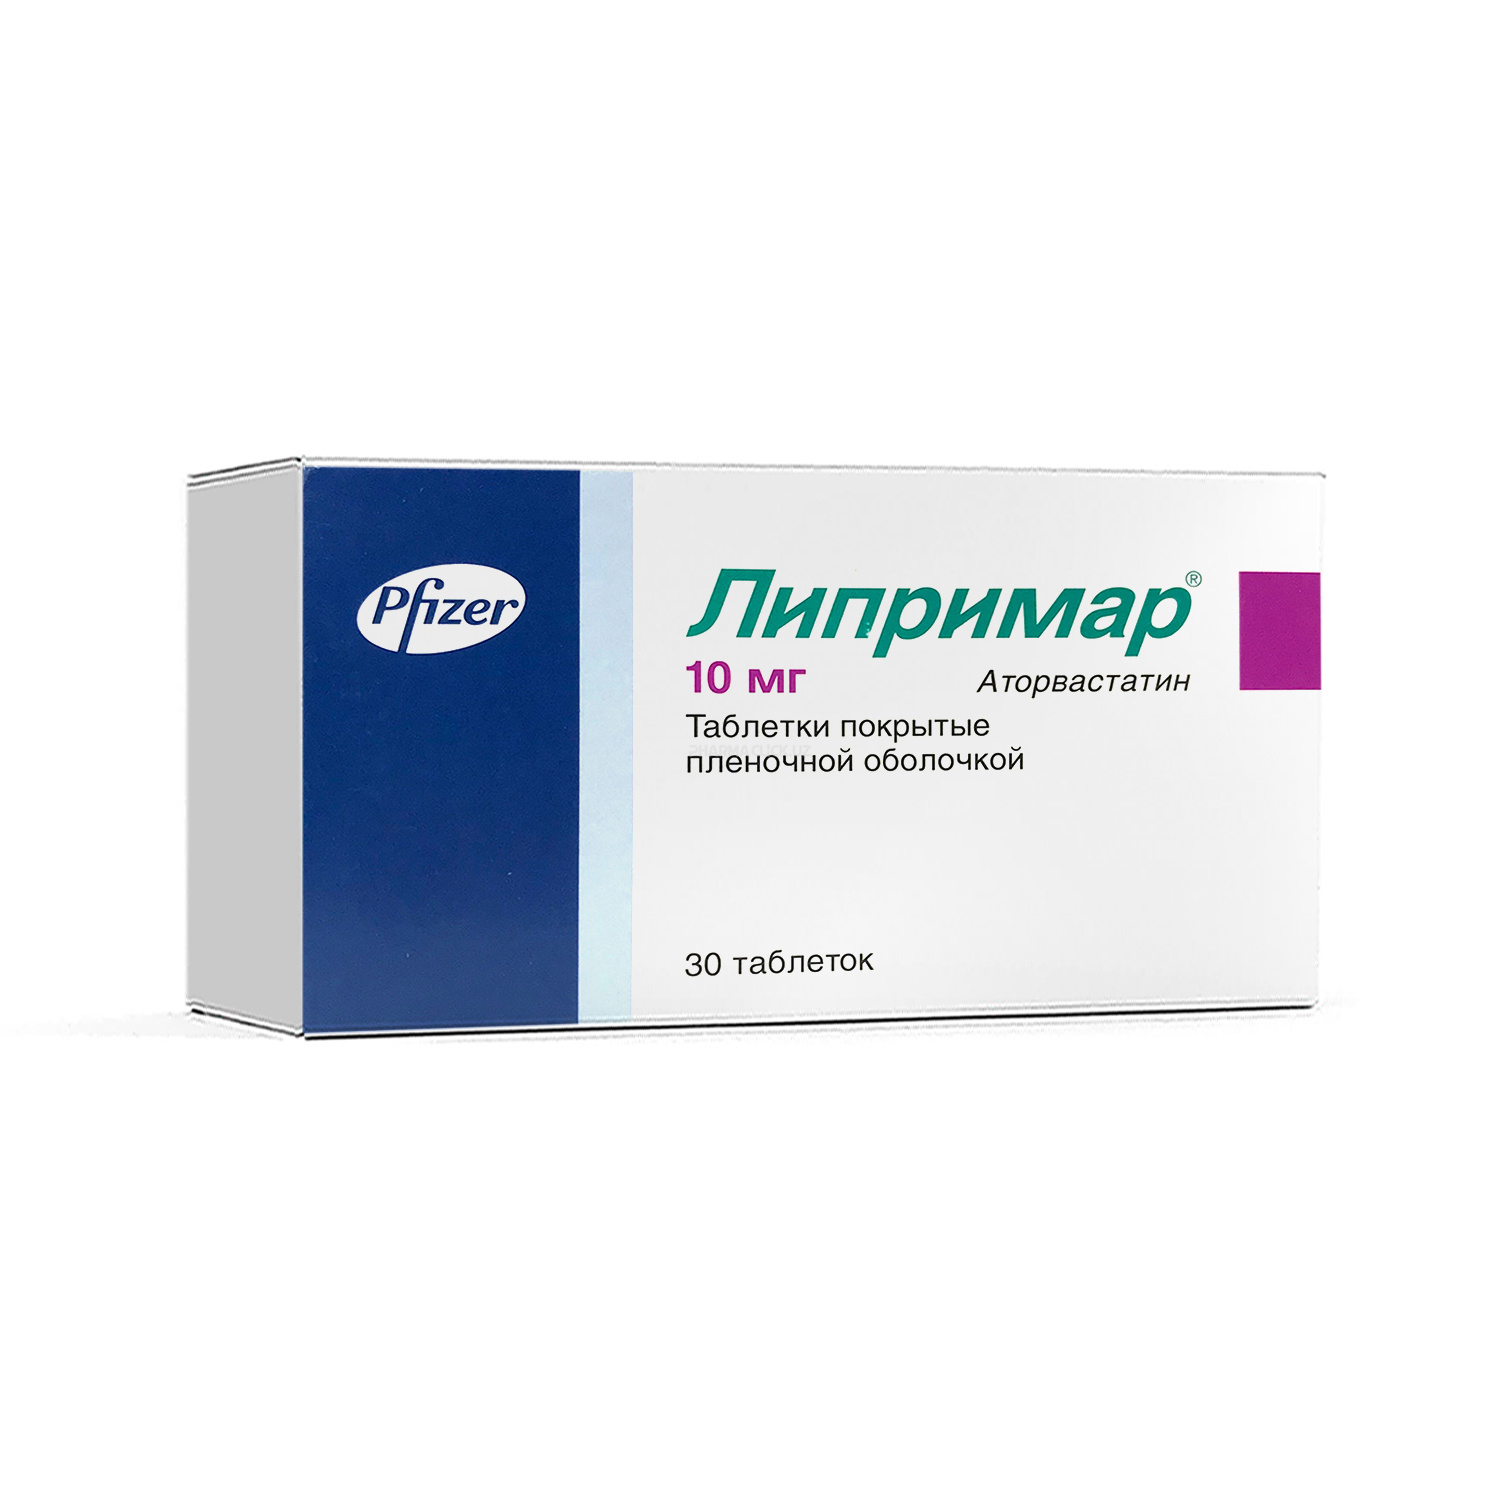 Liprimar tab 10 mg №30